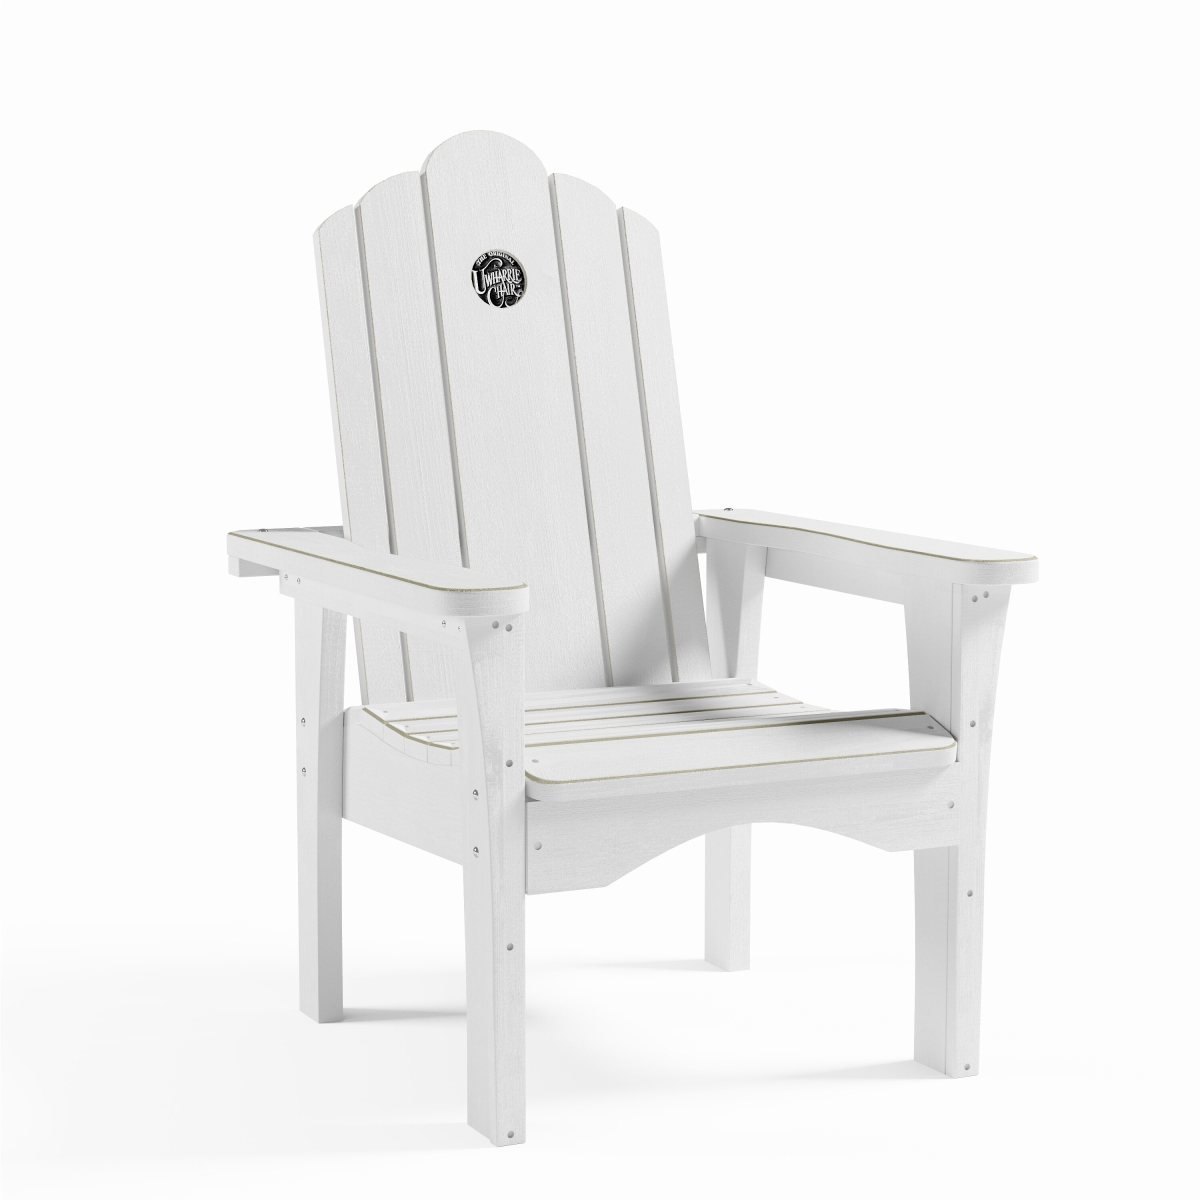 S114-027 Original Wood Lounge Chair, Caribbean Blue Pine - 30.5 X 33.5 X 43.5 In.